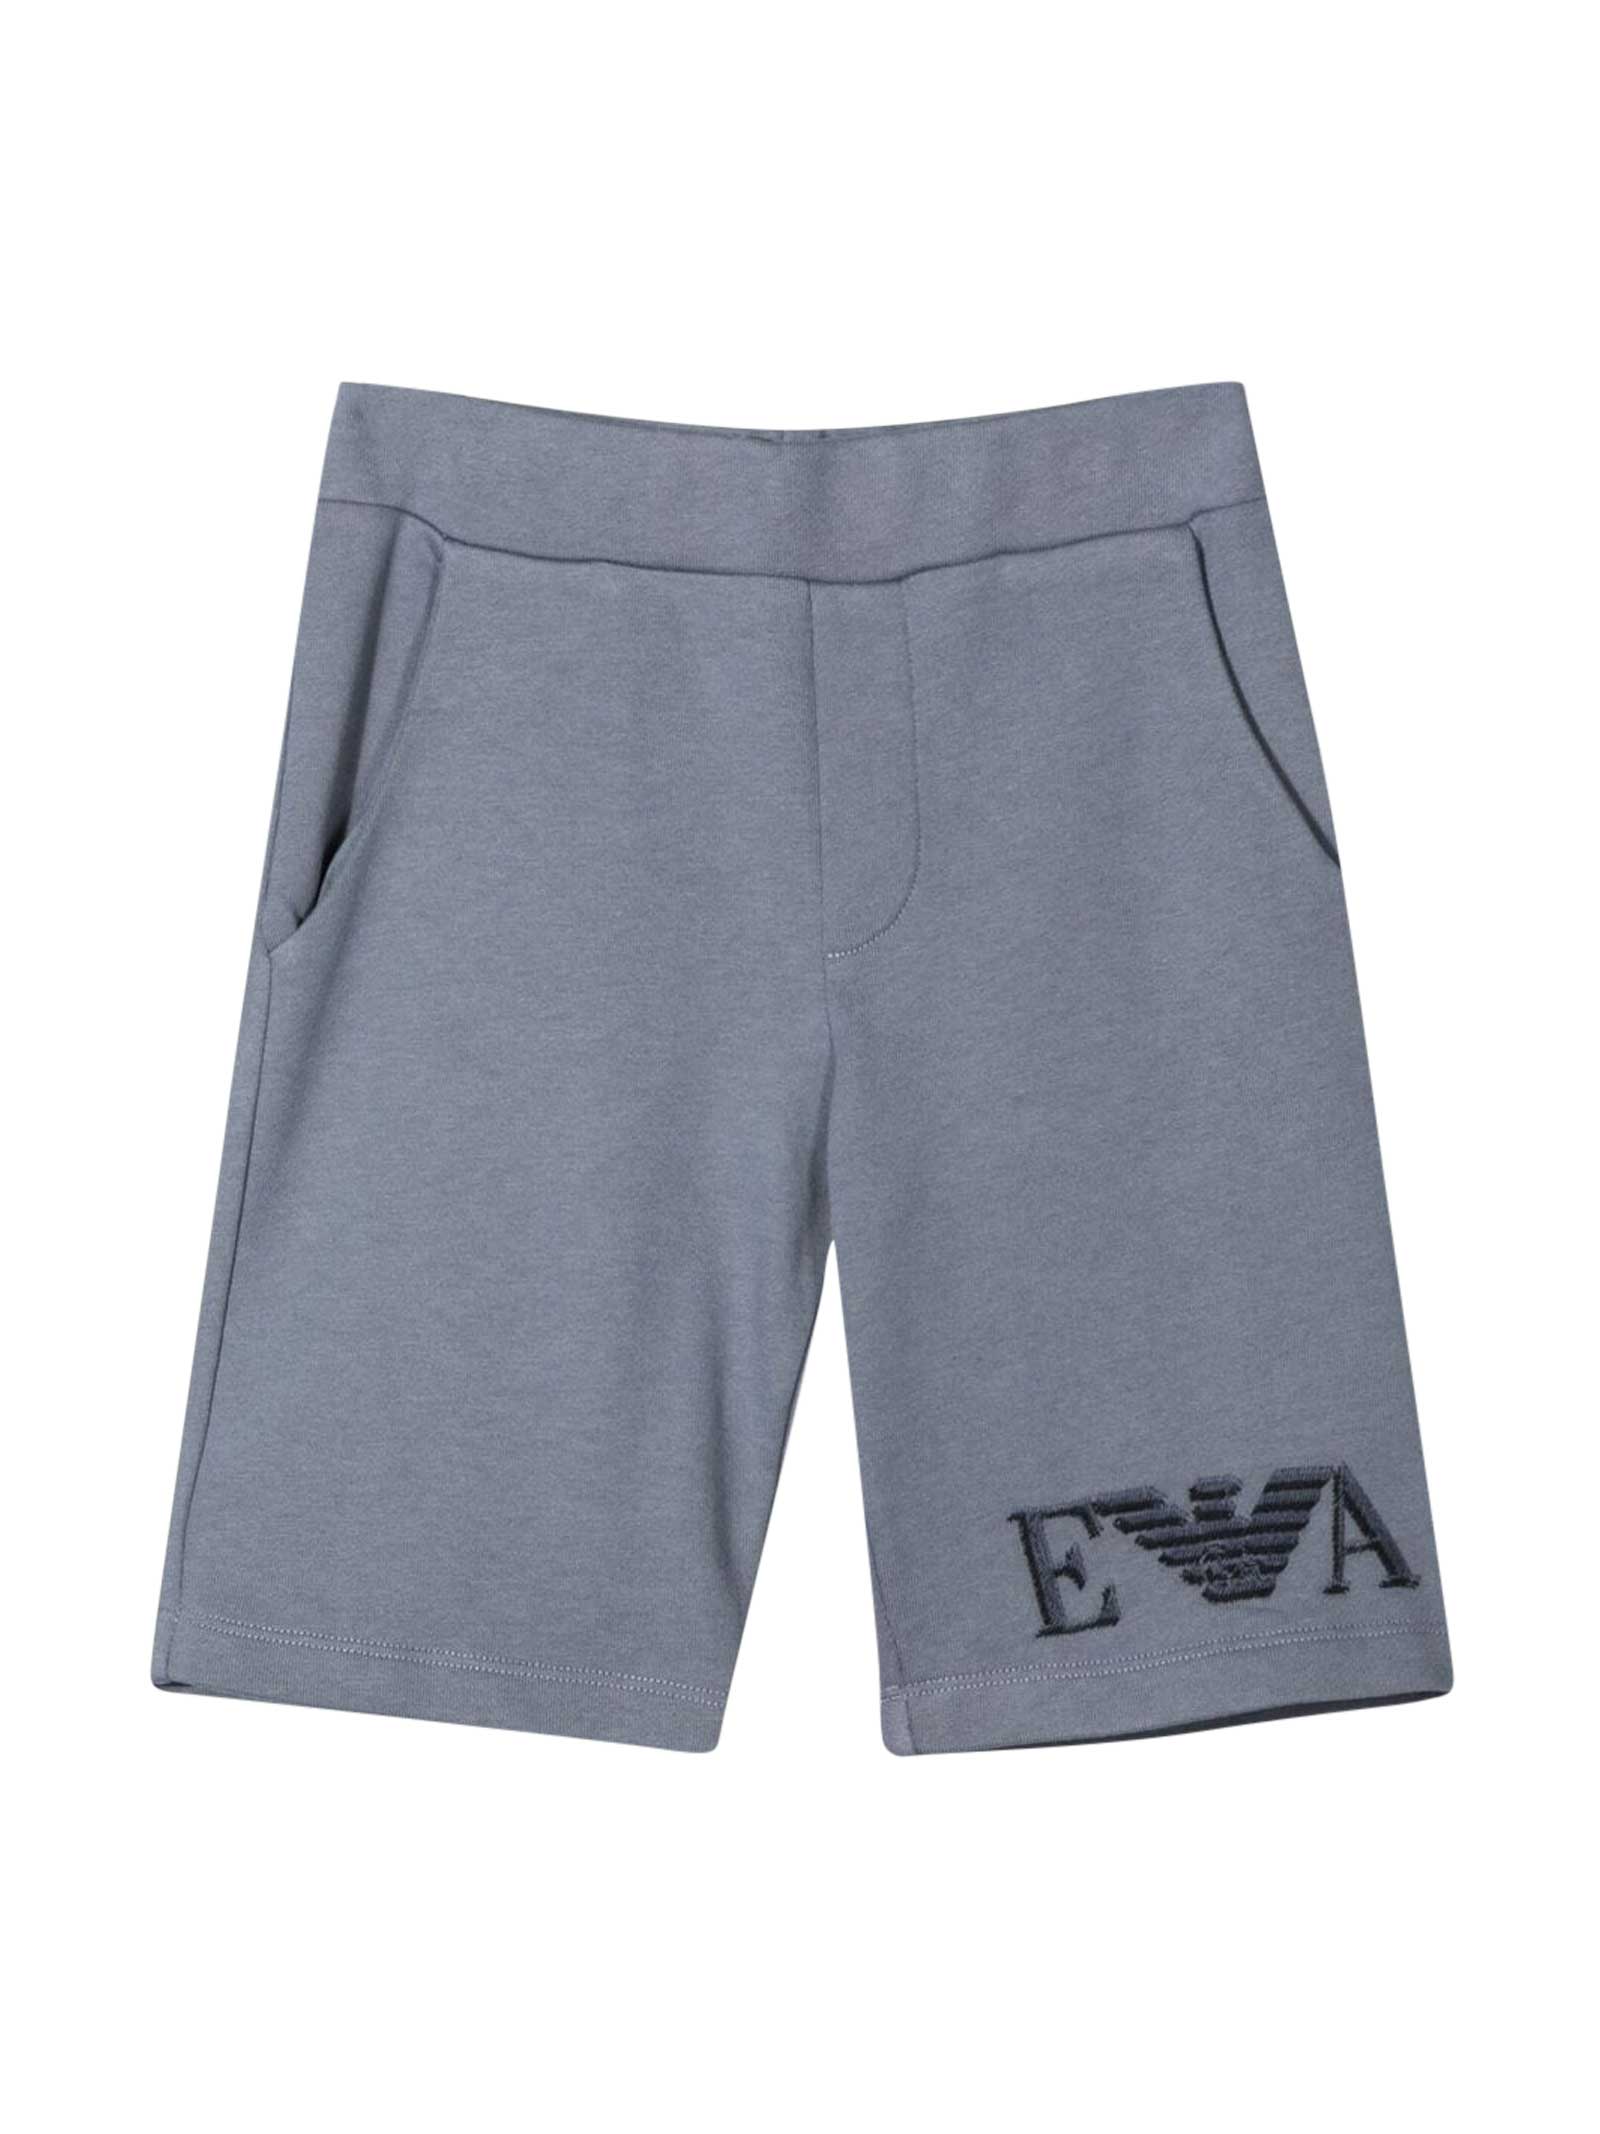 Emporio Armani Gray Shorts